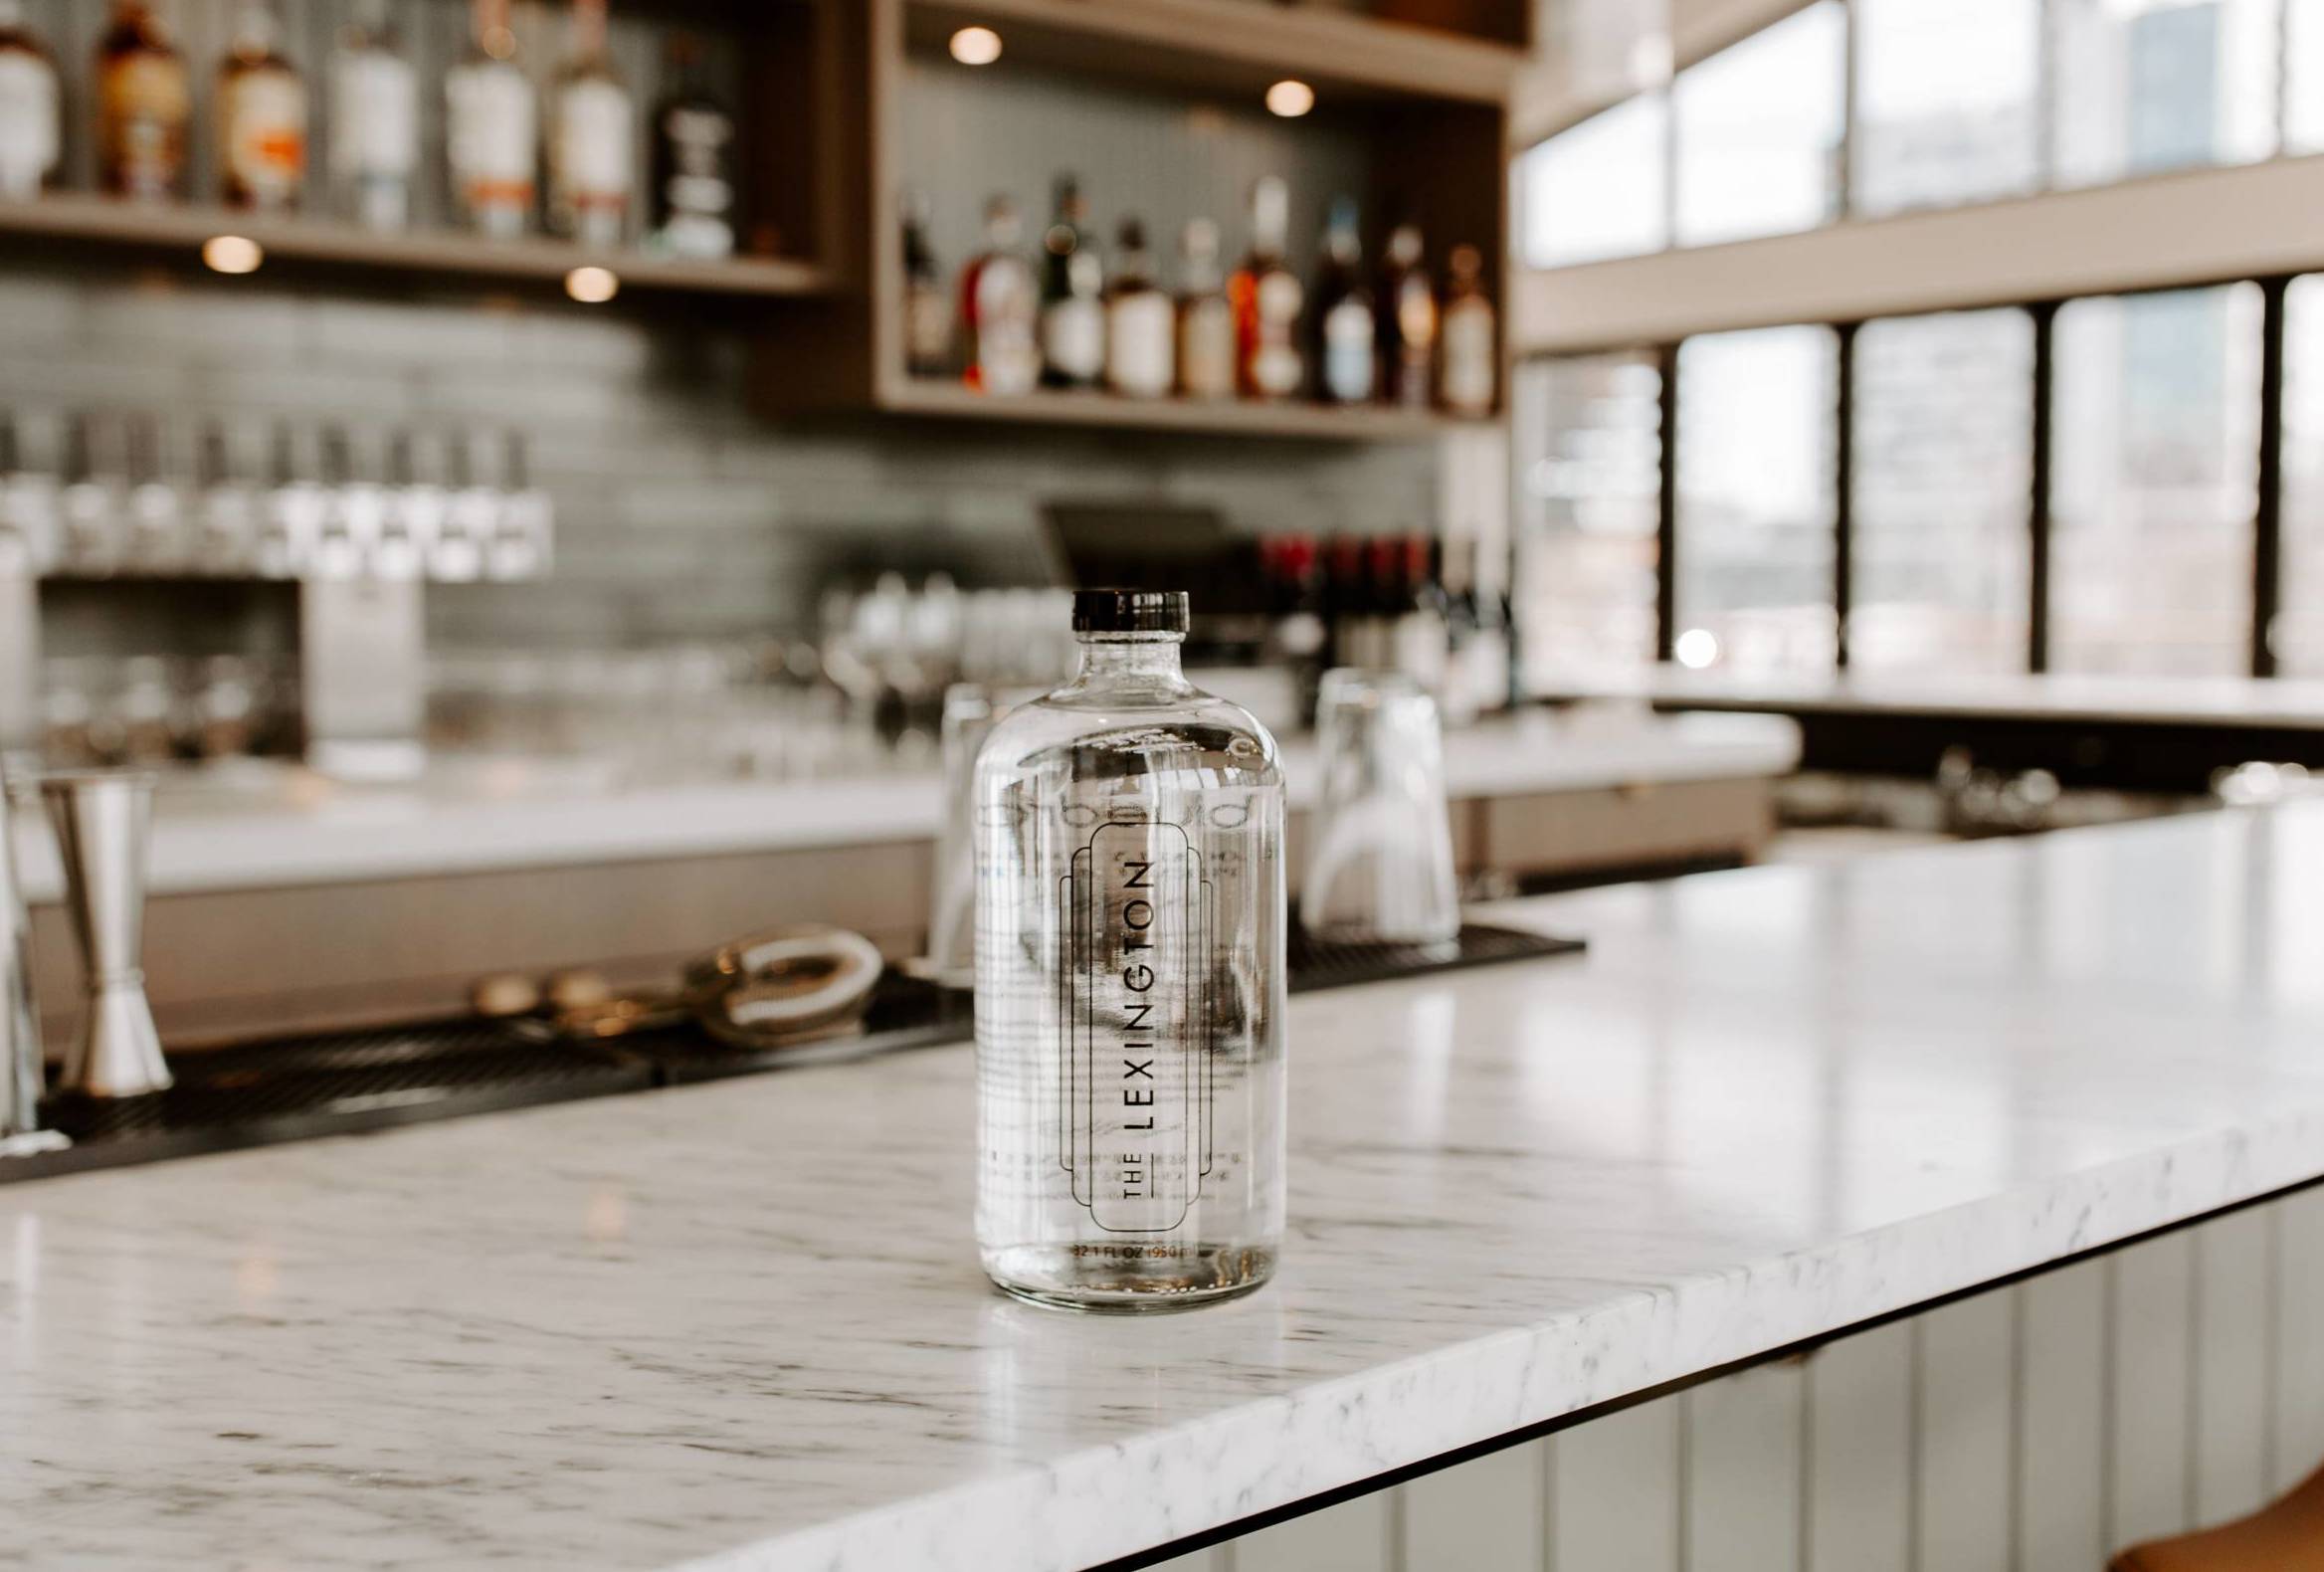 A lexington branded glass bottle on a bar counter.